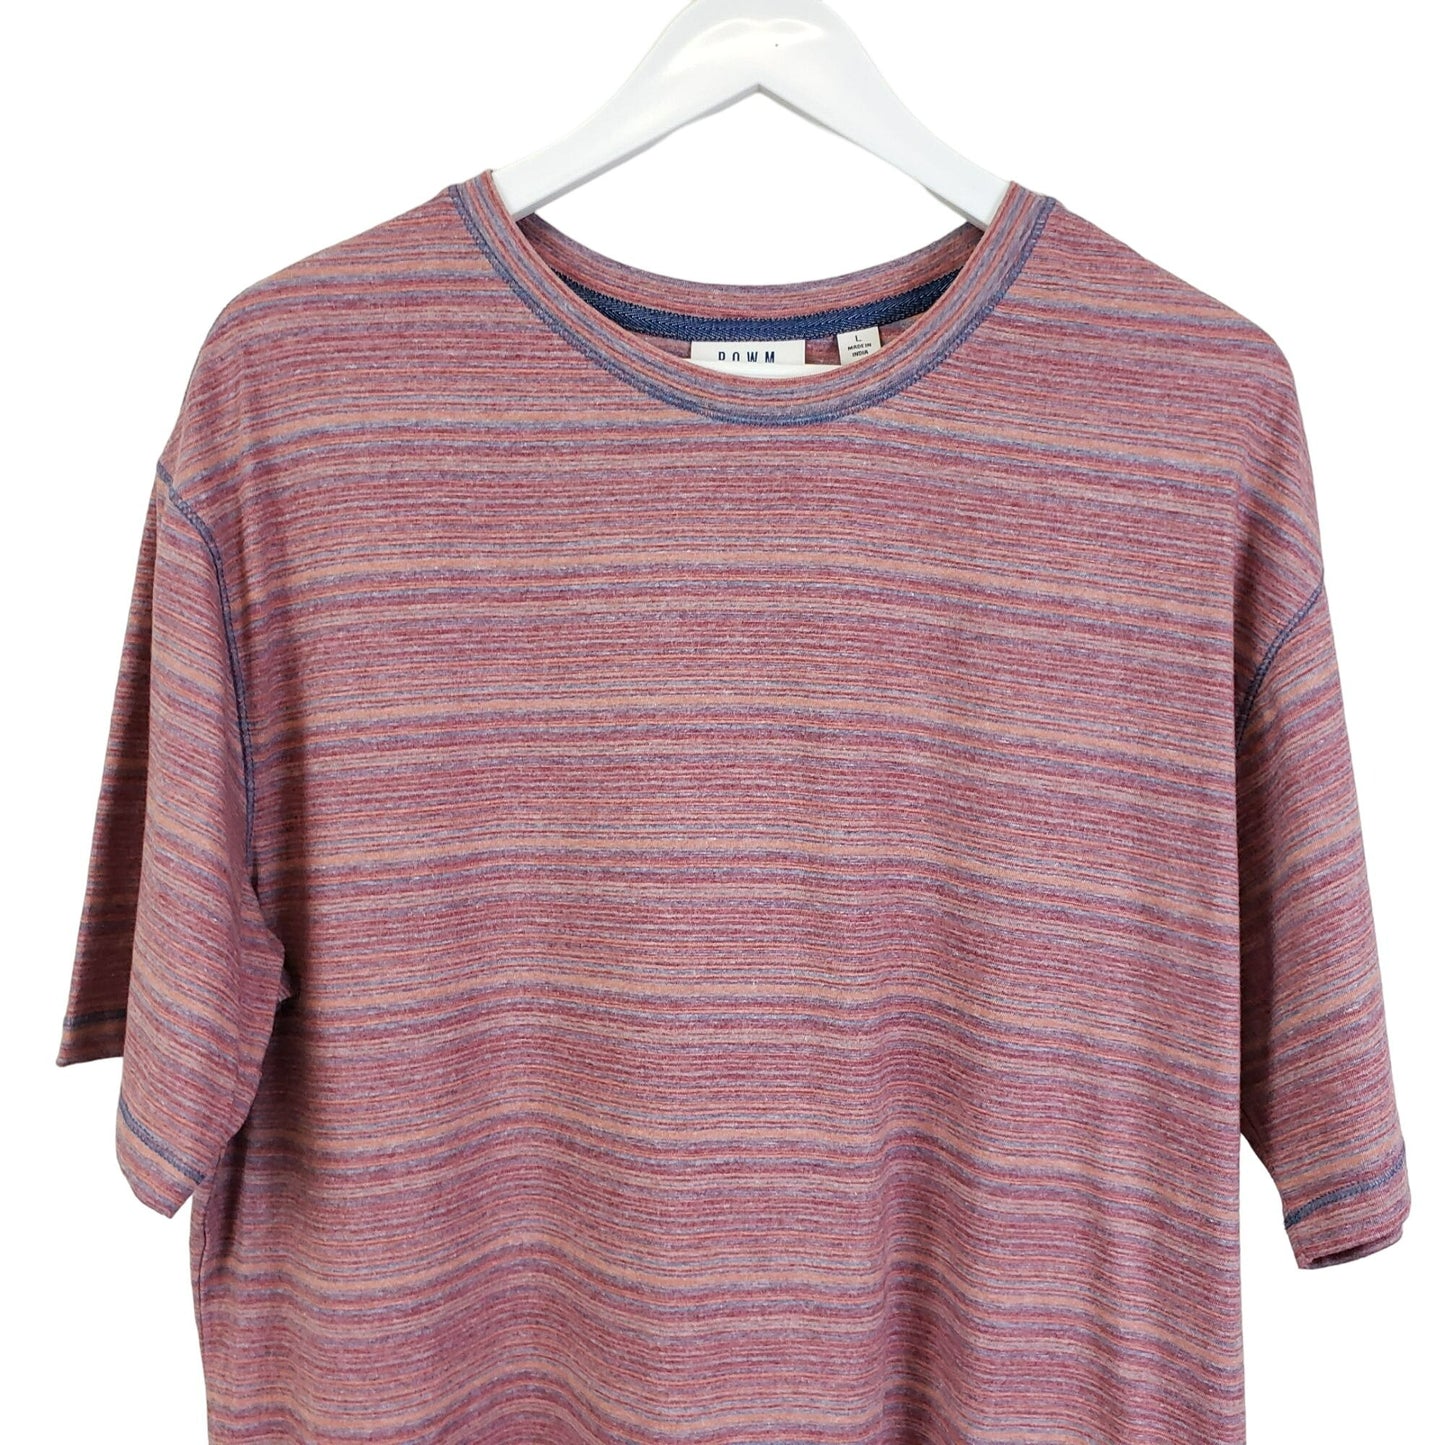 NWT ROWM Striped Short Sleeve T-Shirt Size Large